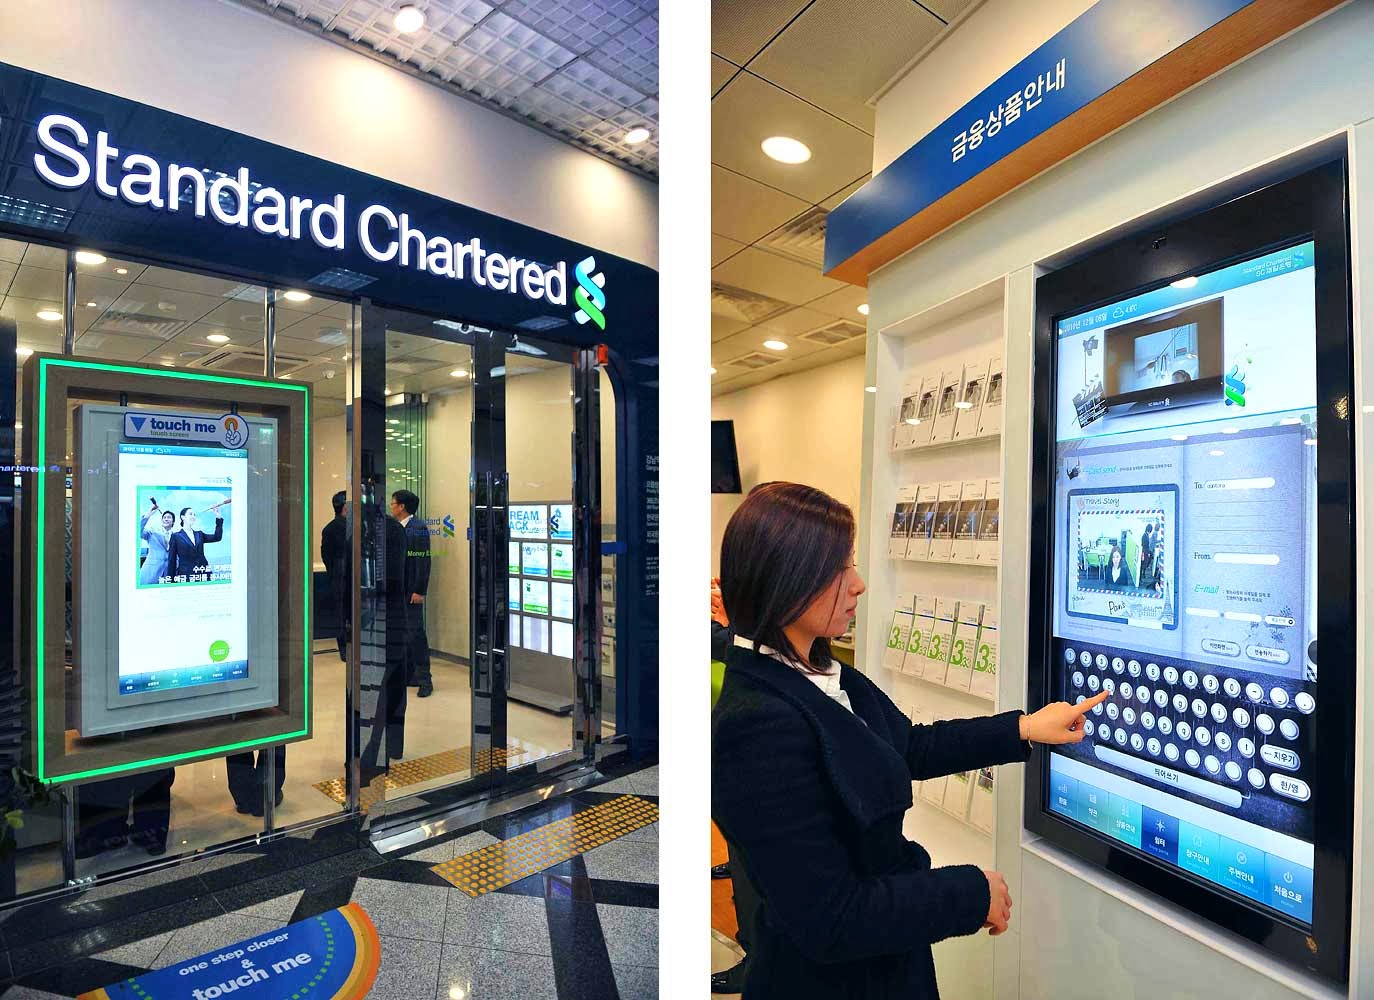 Standard Bank Chartered, British Standard Bank Chartered, digital transformation, Digitization, new tech, 